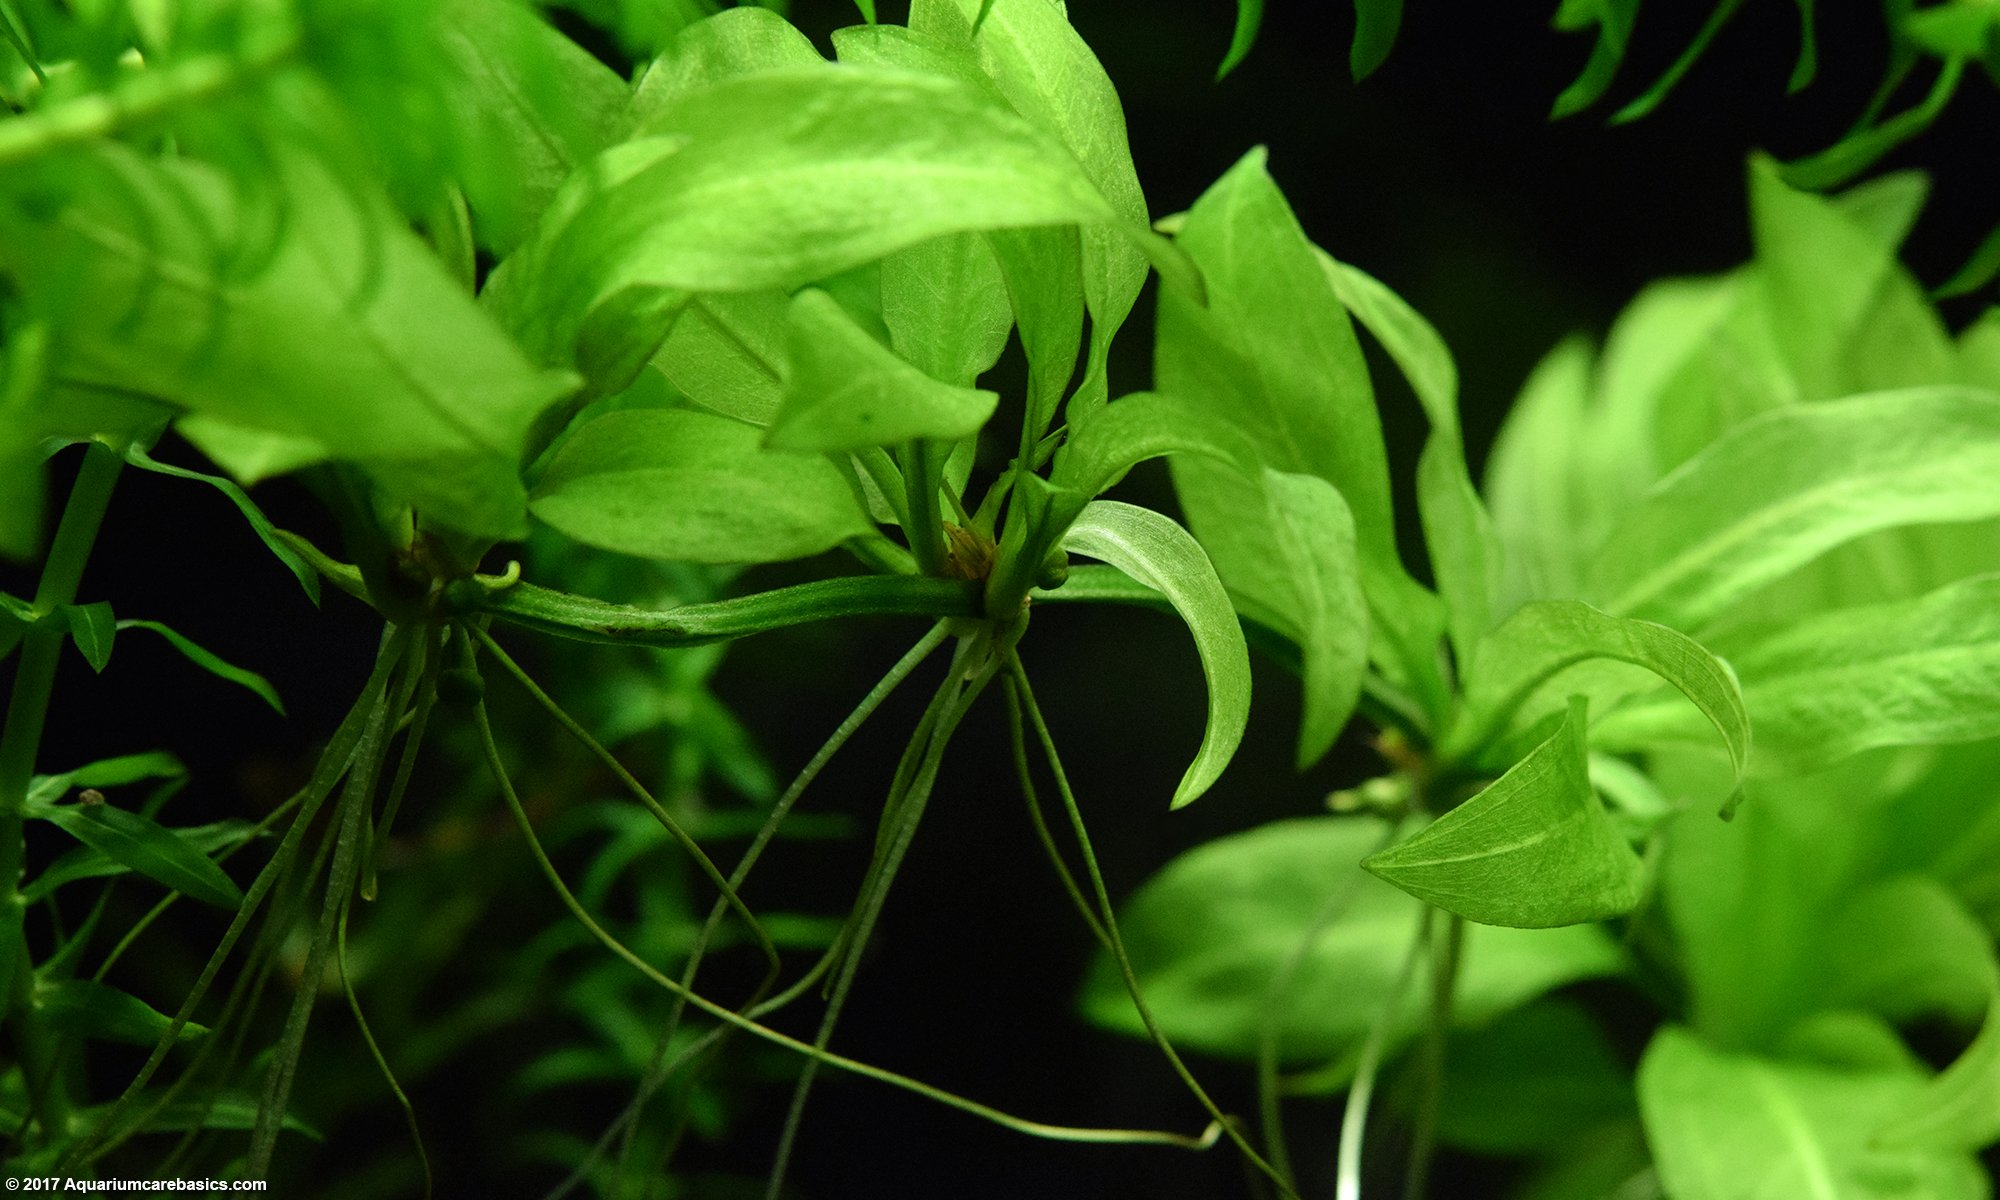 Amazon Sword Plant Growing Under Good Conditions